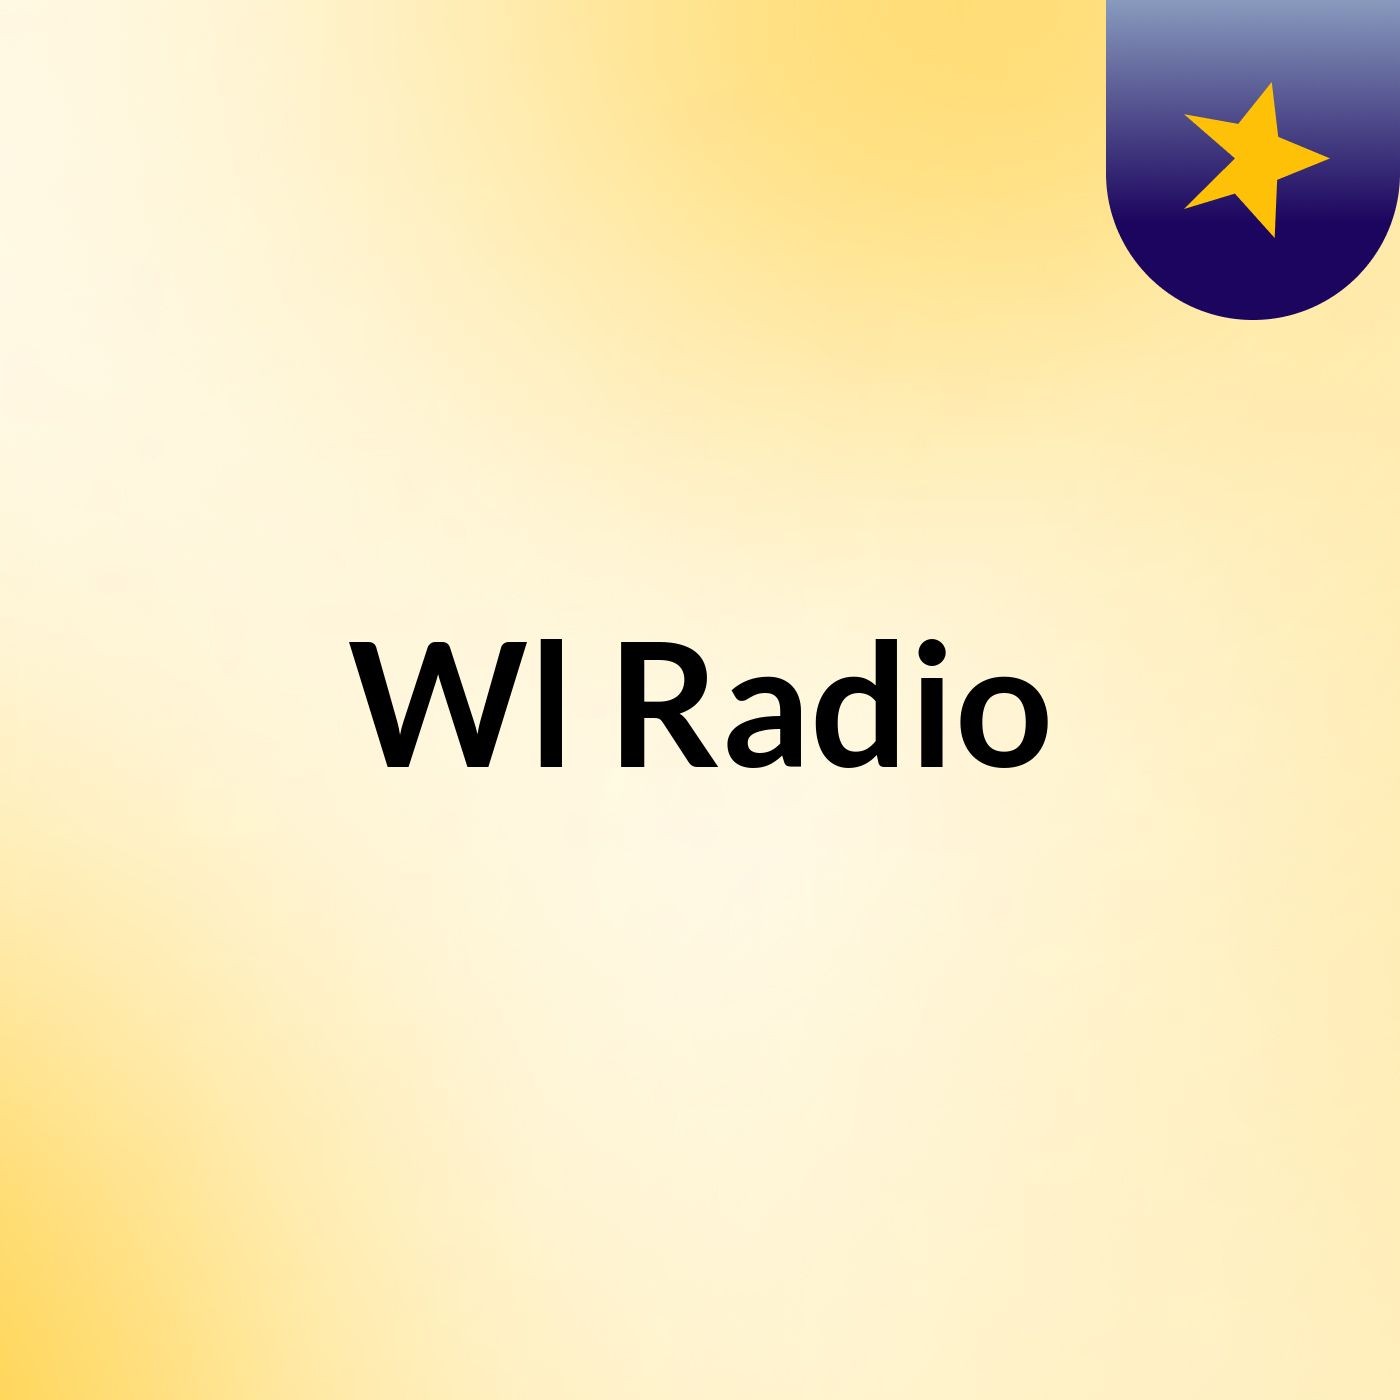 Wl Radio